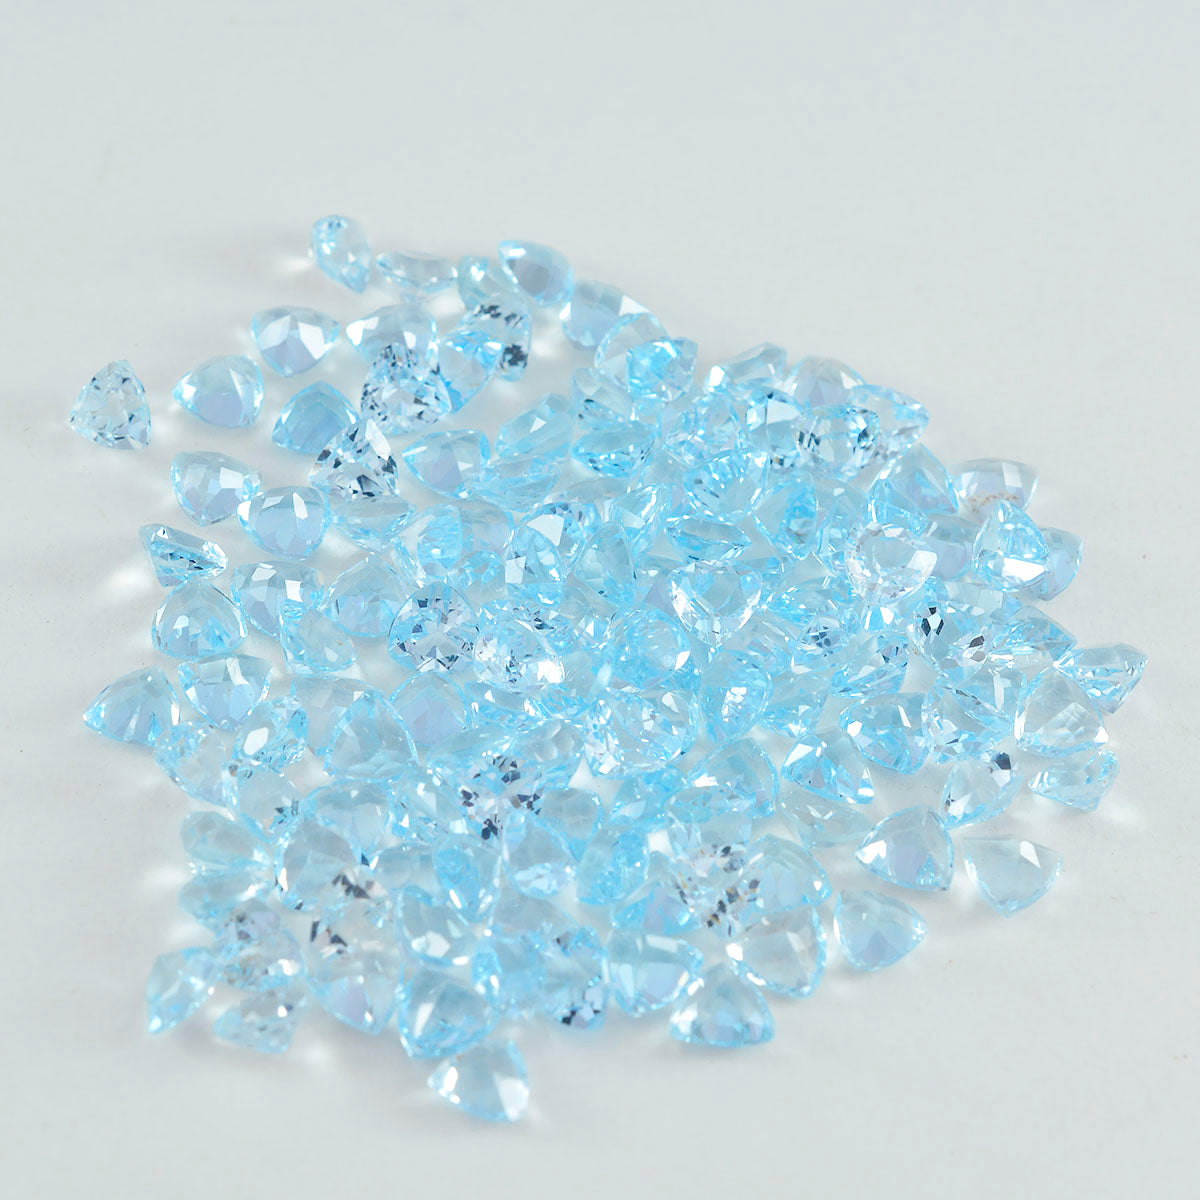 Riyogems 1PC Natural Blue Topaz Faceted 4x4 mm Trillion Shape pretty Quality Stone